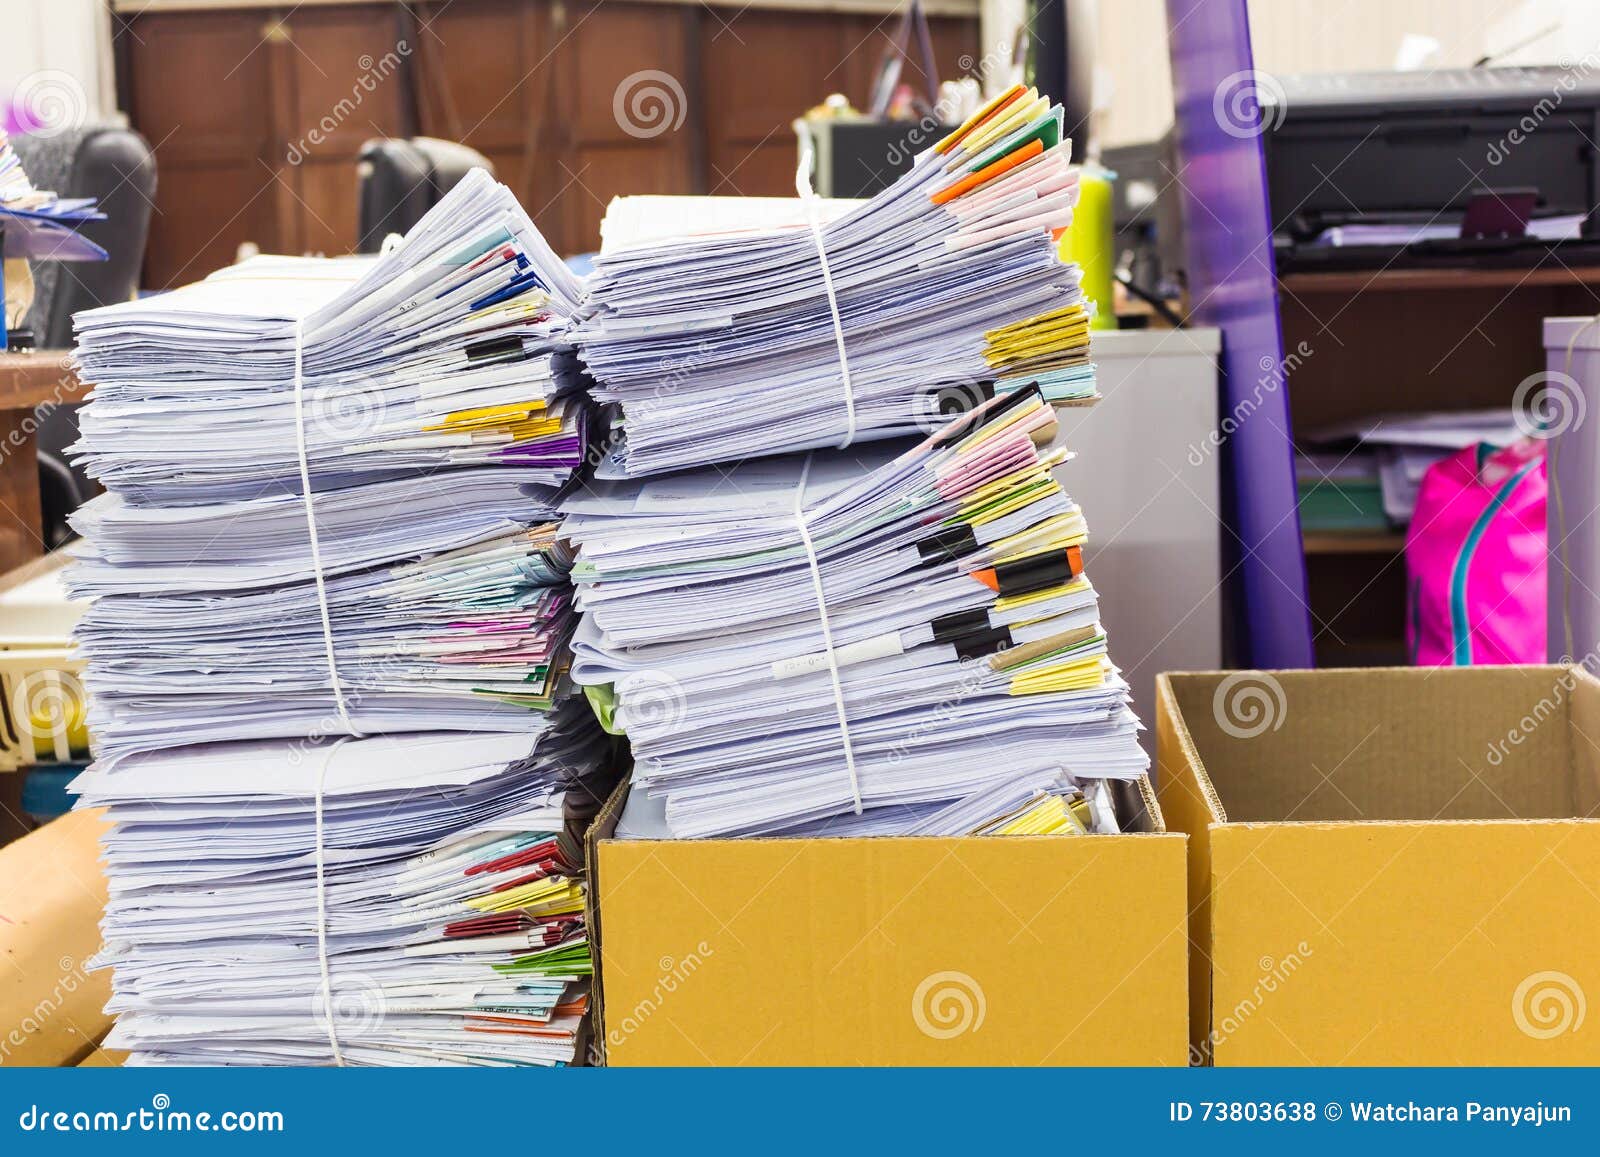 Много бумаг на столе. Куча документов. Офис куча документов. Много бумаг по культуре.